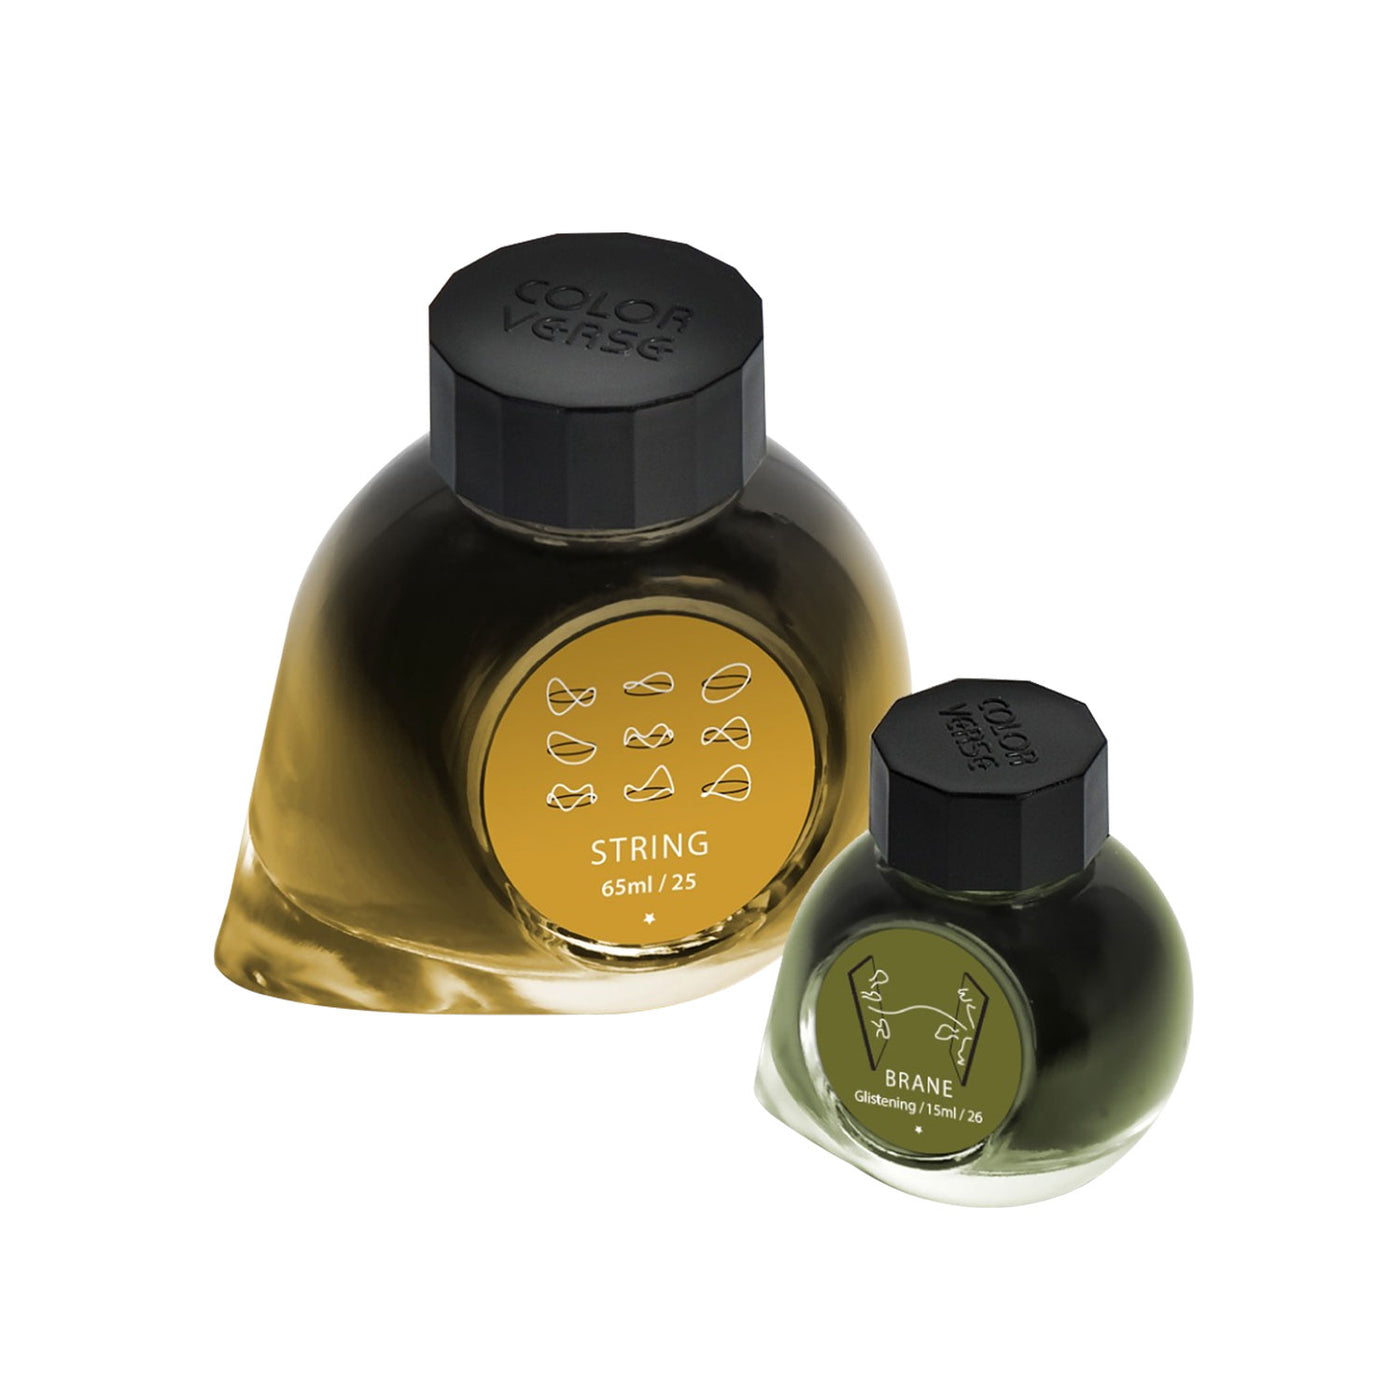 Colorverse Multiverse String & Brane Ink Bottle Yellow (65ml) + Glistening Green (15ml) 1